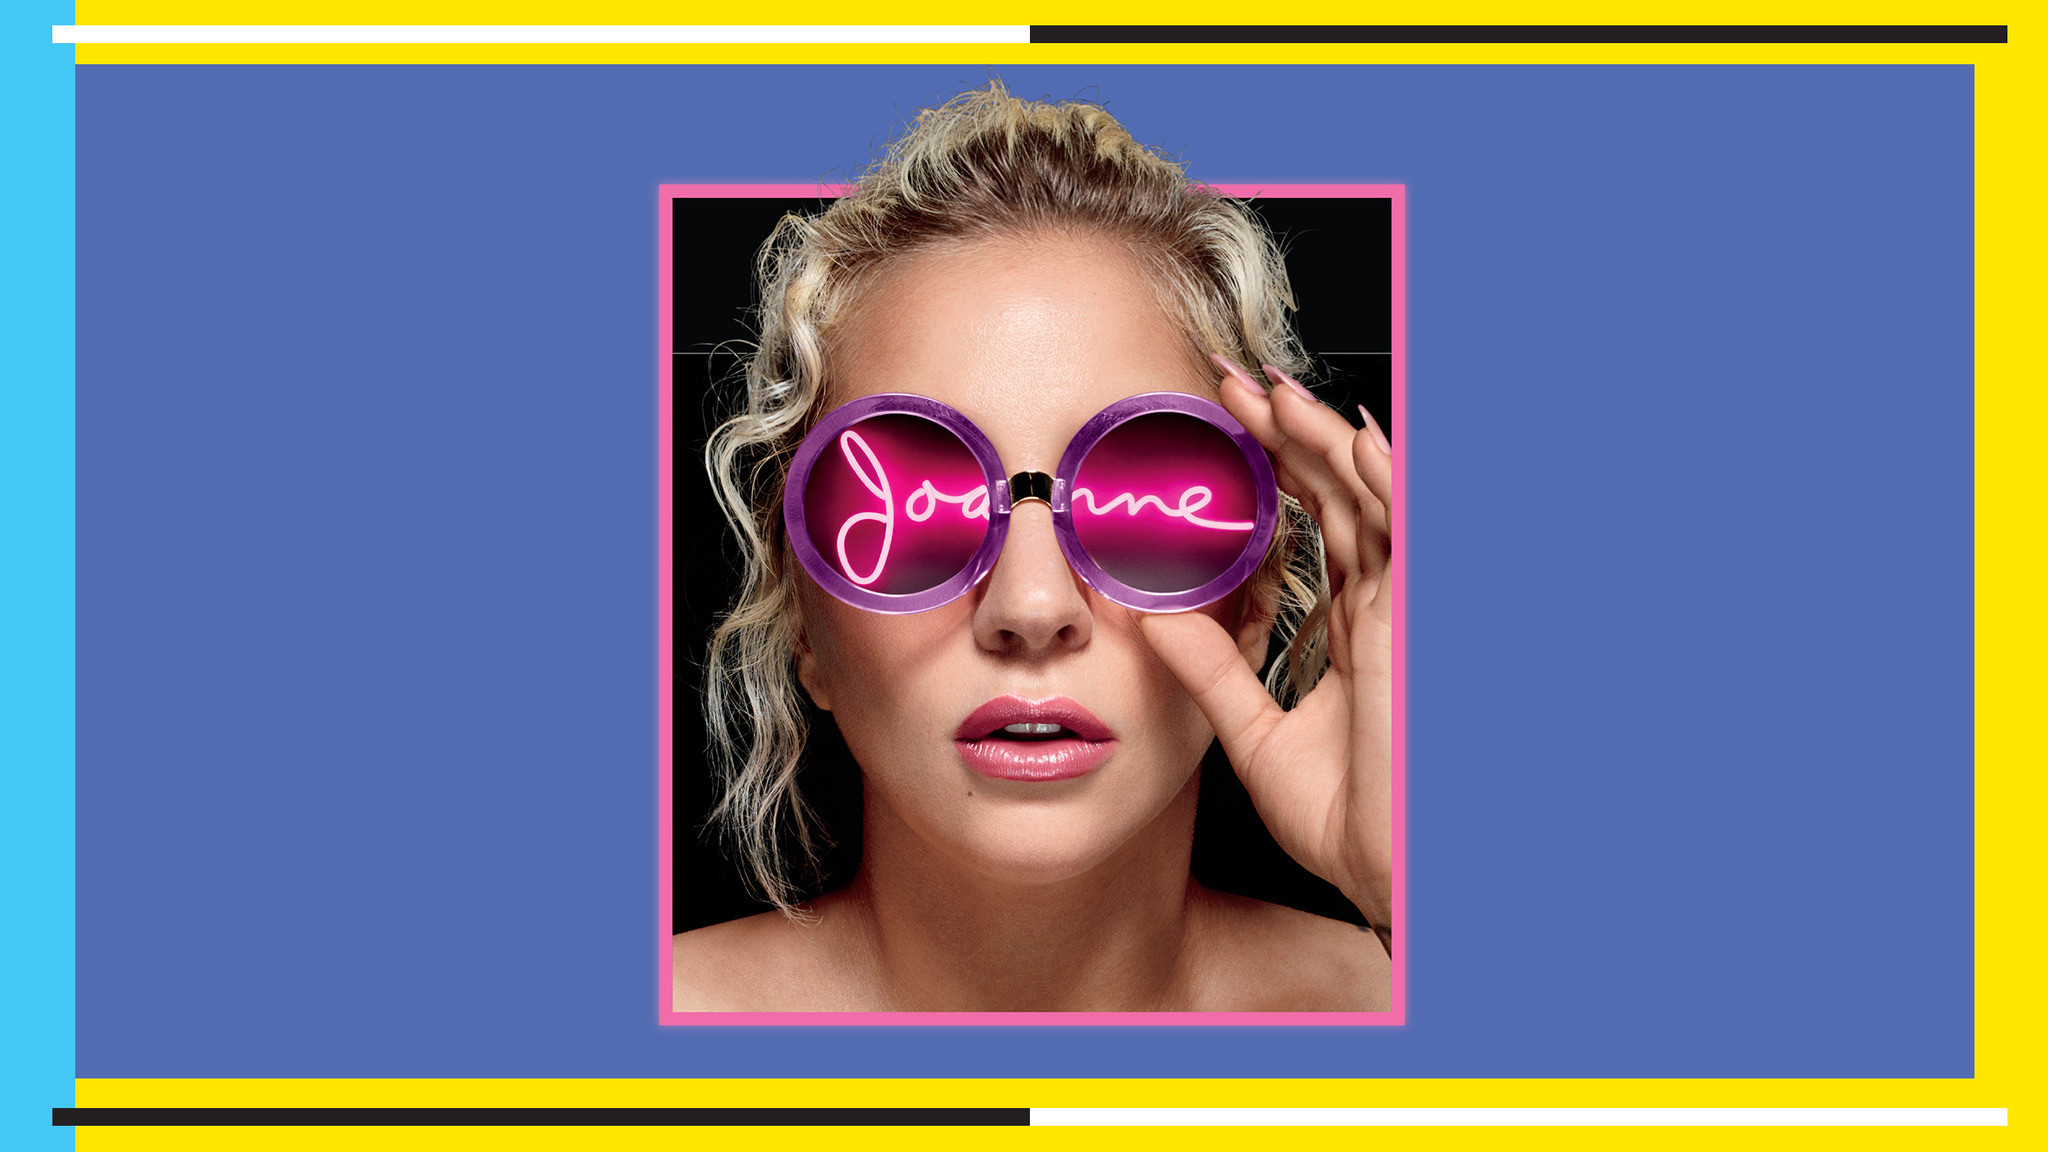 Lady Gaga Wallpaper 2018 (79+ images)